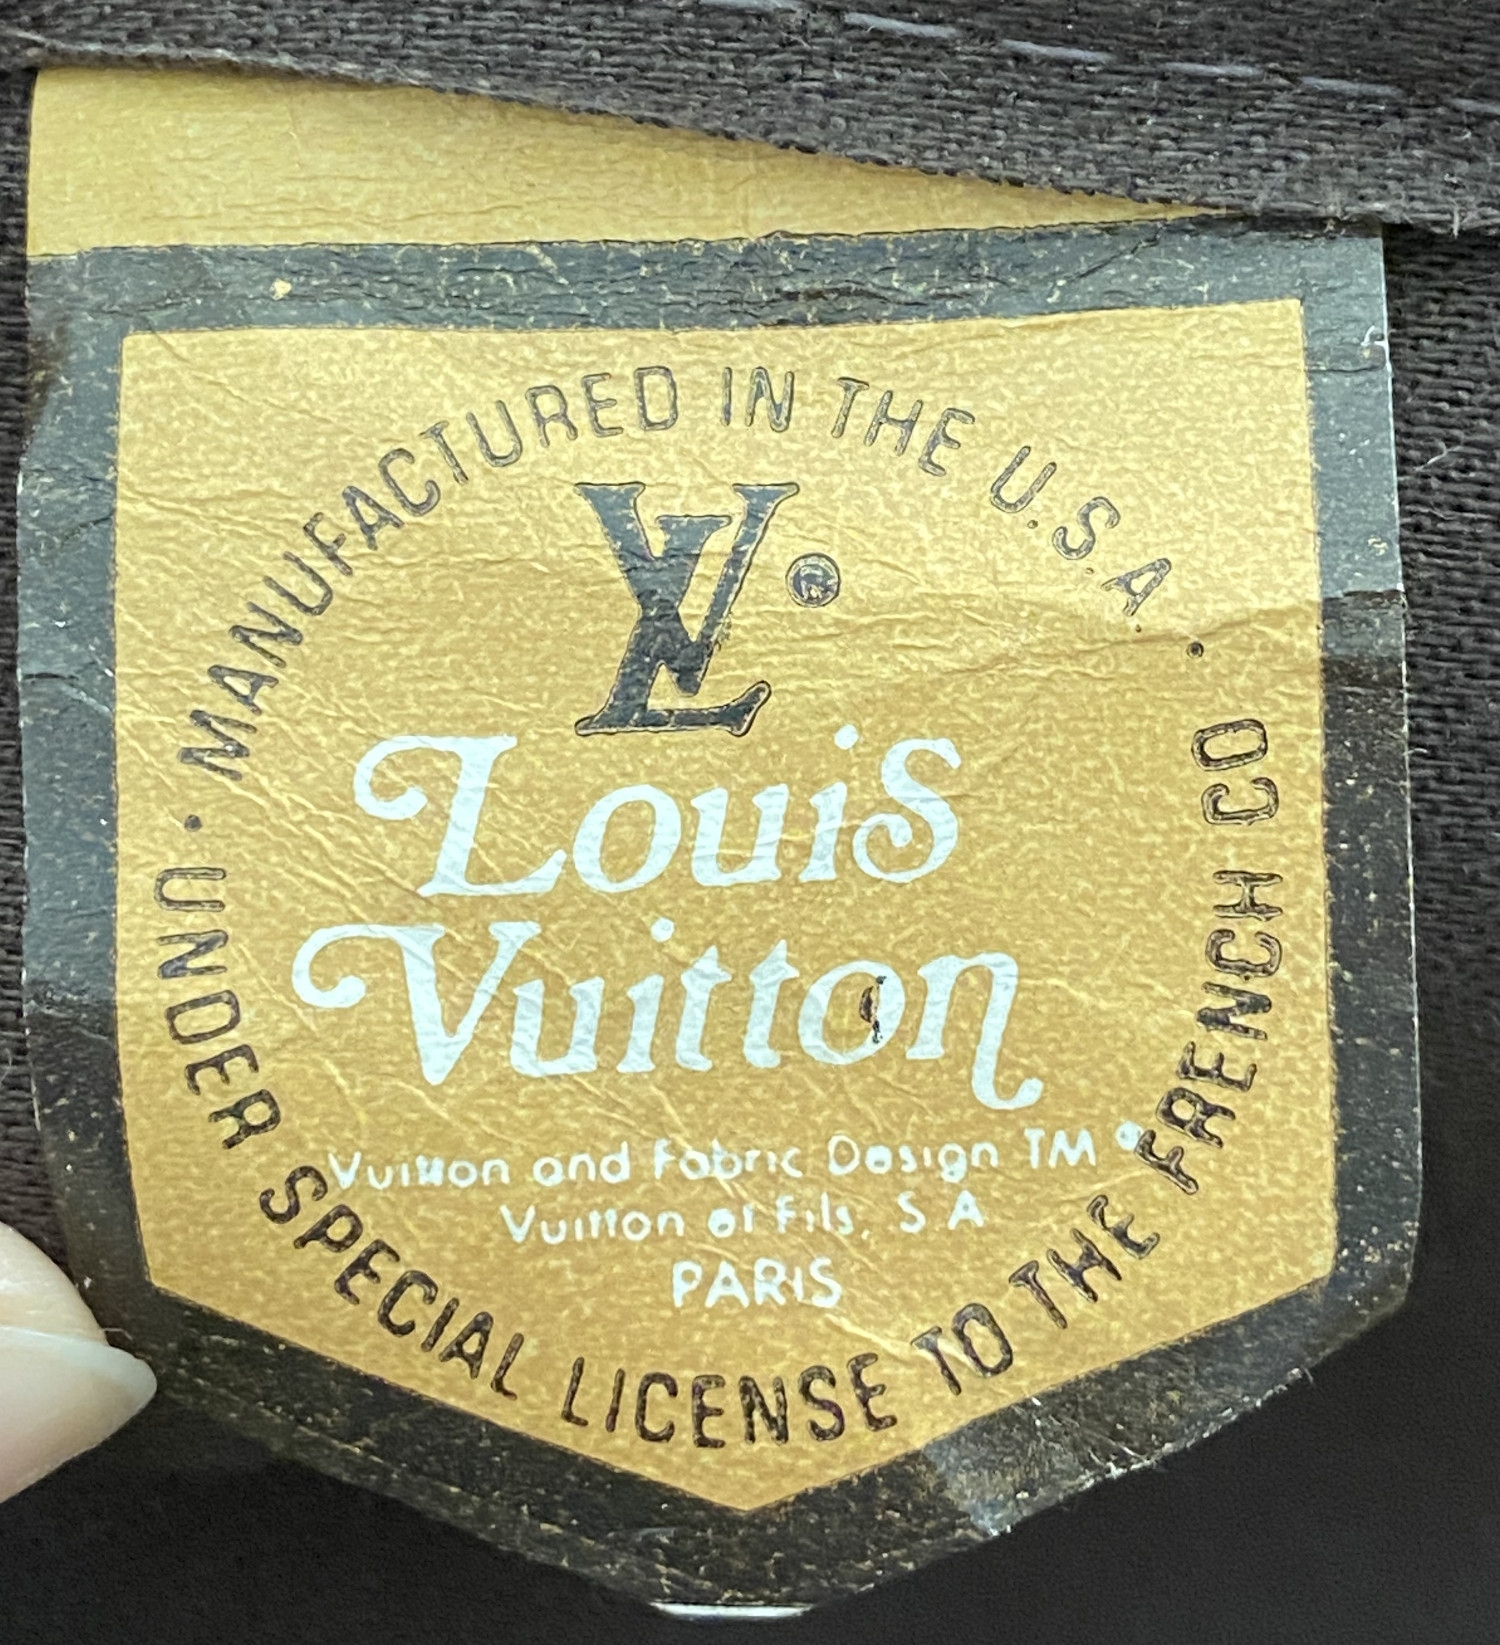 Louis Vuitton Vintage French Company Monogram Shoulder Bag